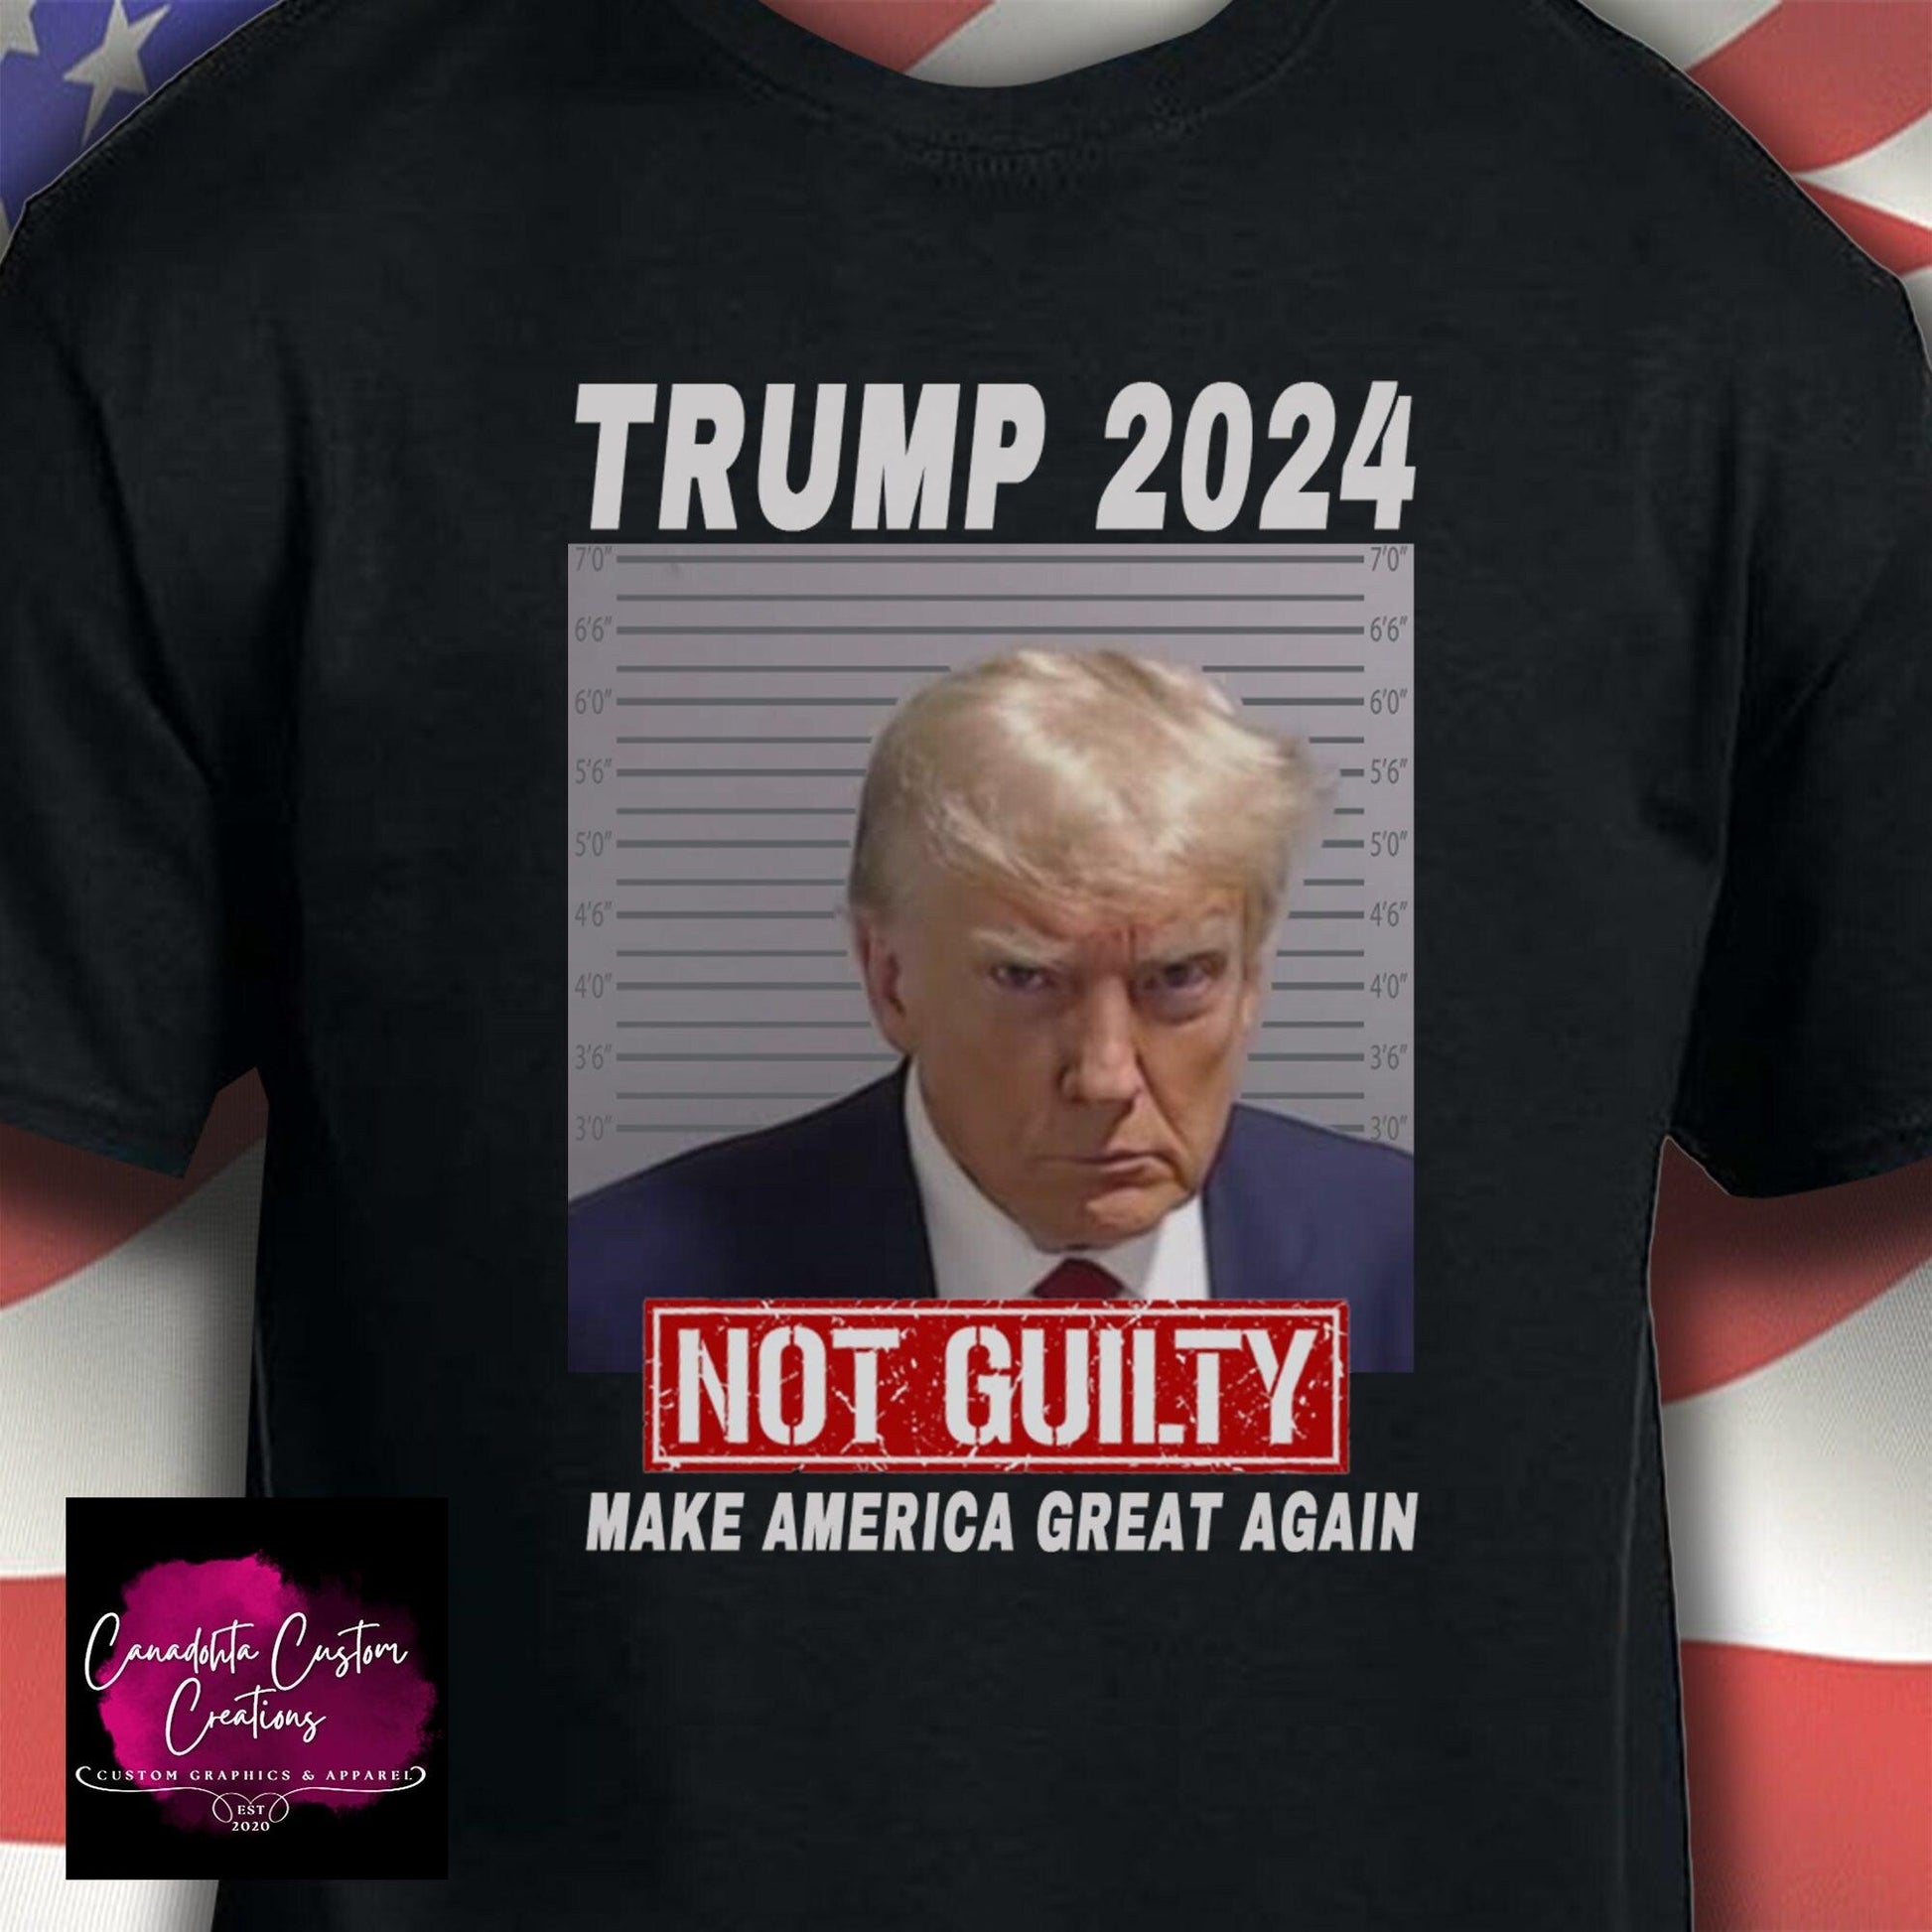 Official Donald Trump Mug Shot Not Guilty tee, Trump 2024 t-shirt, Make America Great Again tshirt, MAGA Tshirt - Canadohta Custom Creations LLC